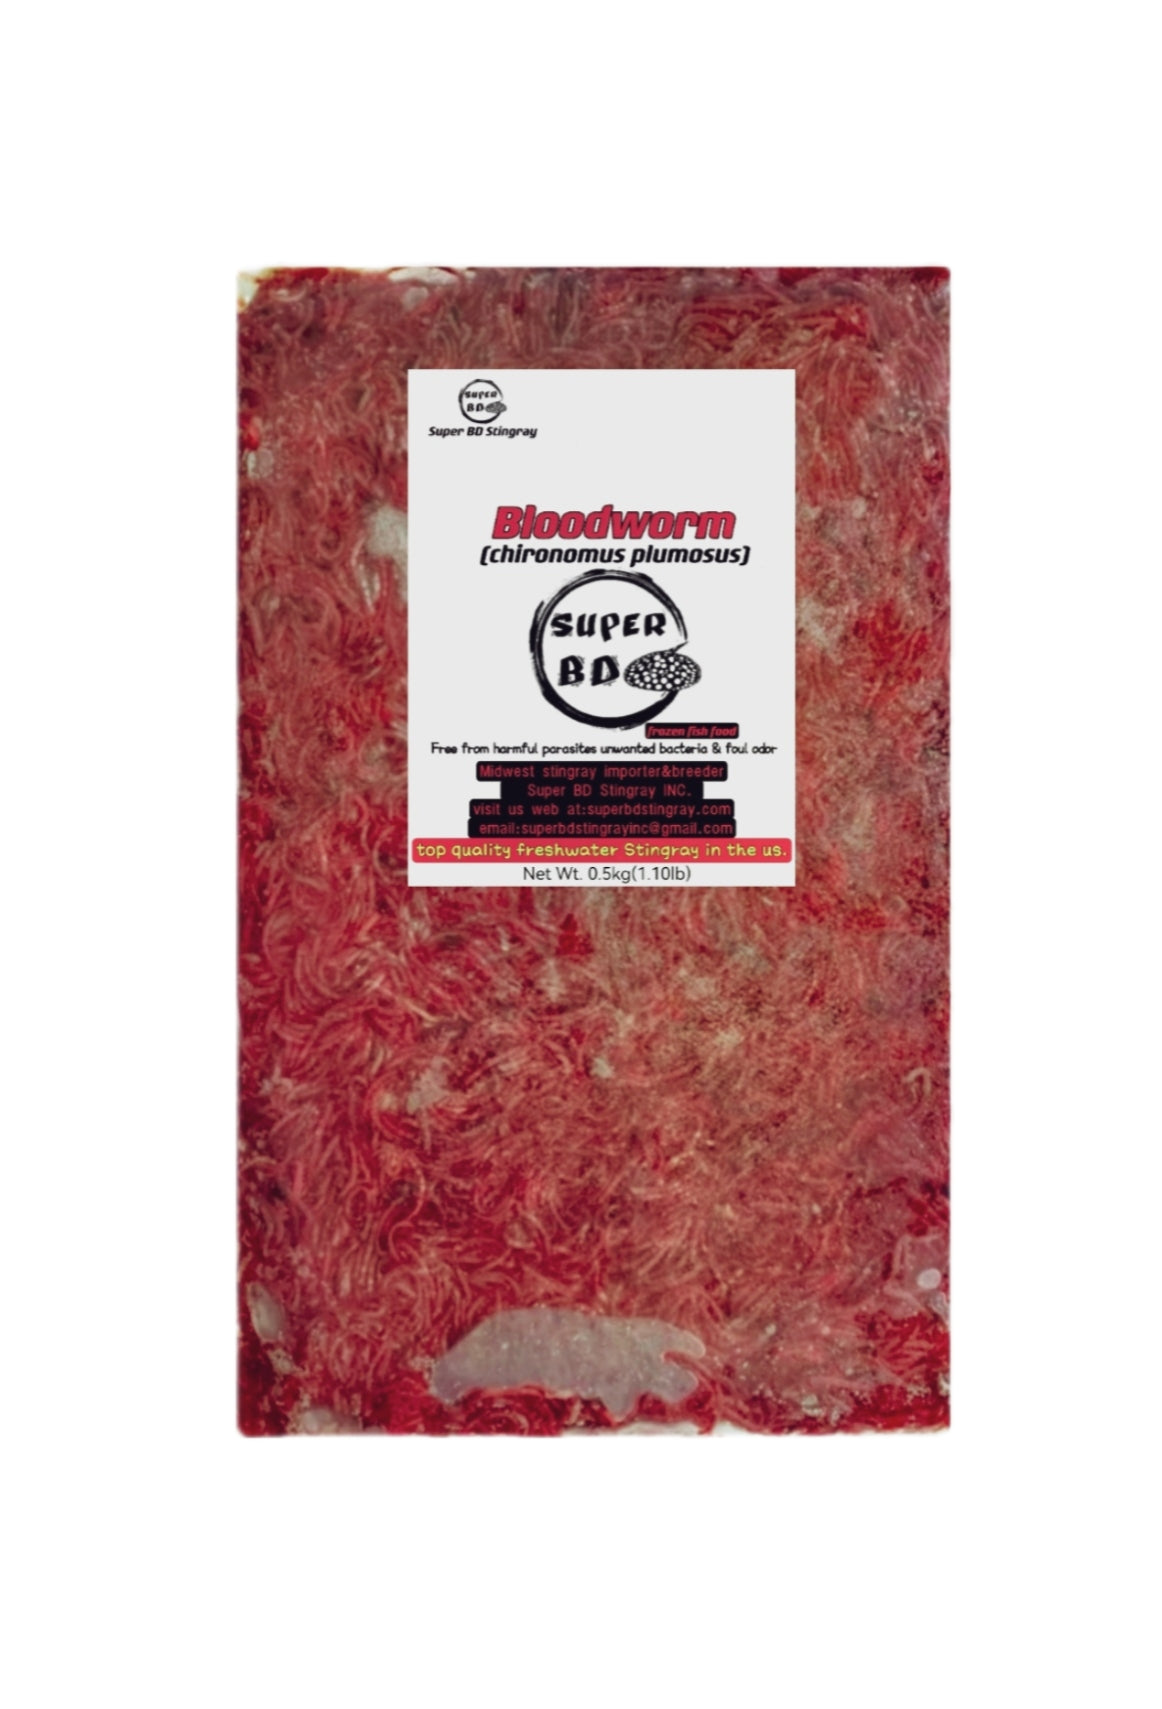 Super BD Stingray Frozen jumbo Bloodworms Flat Packs X10